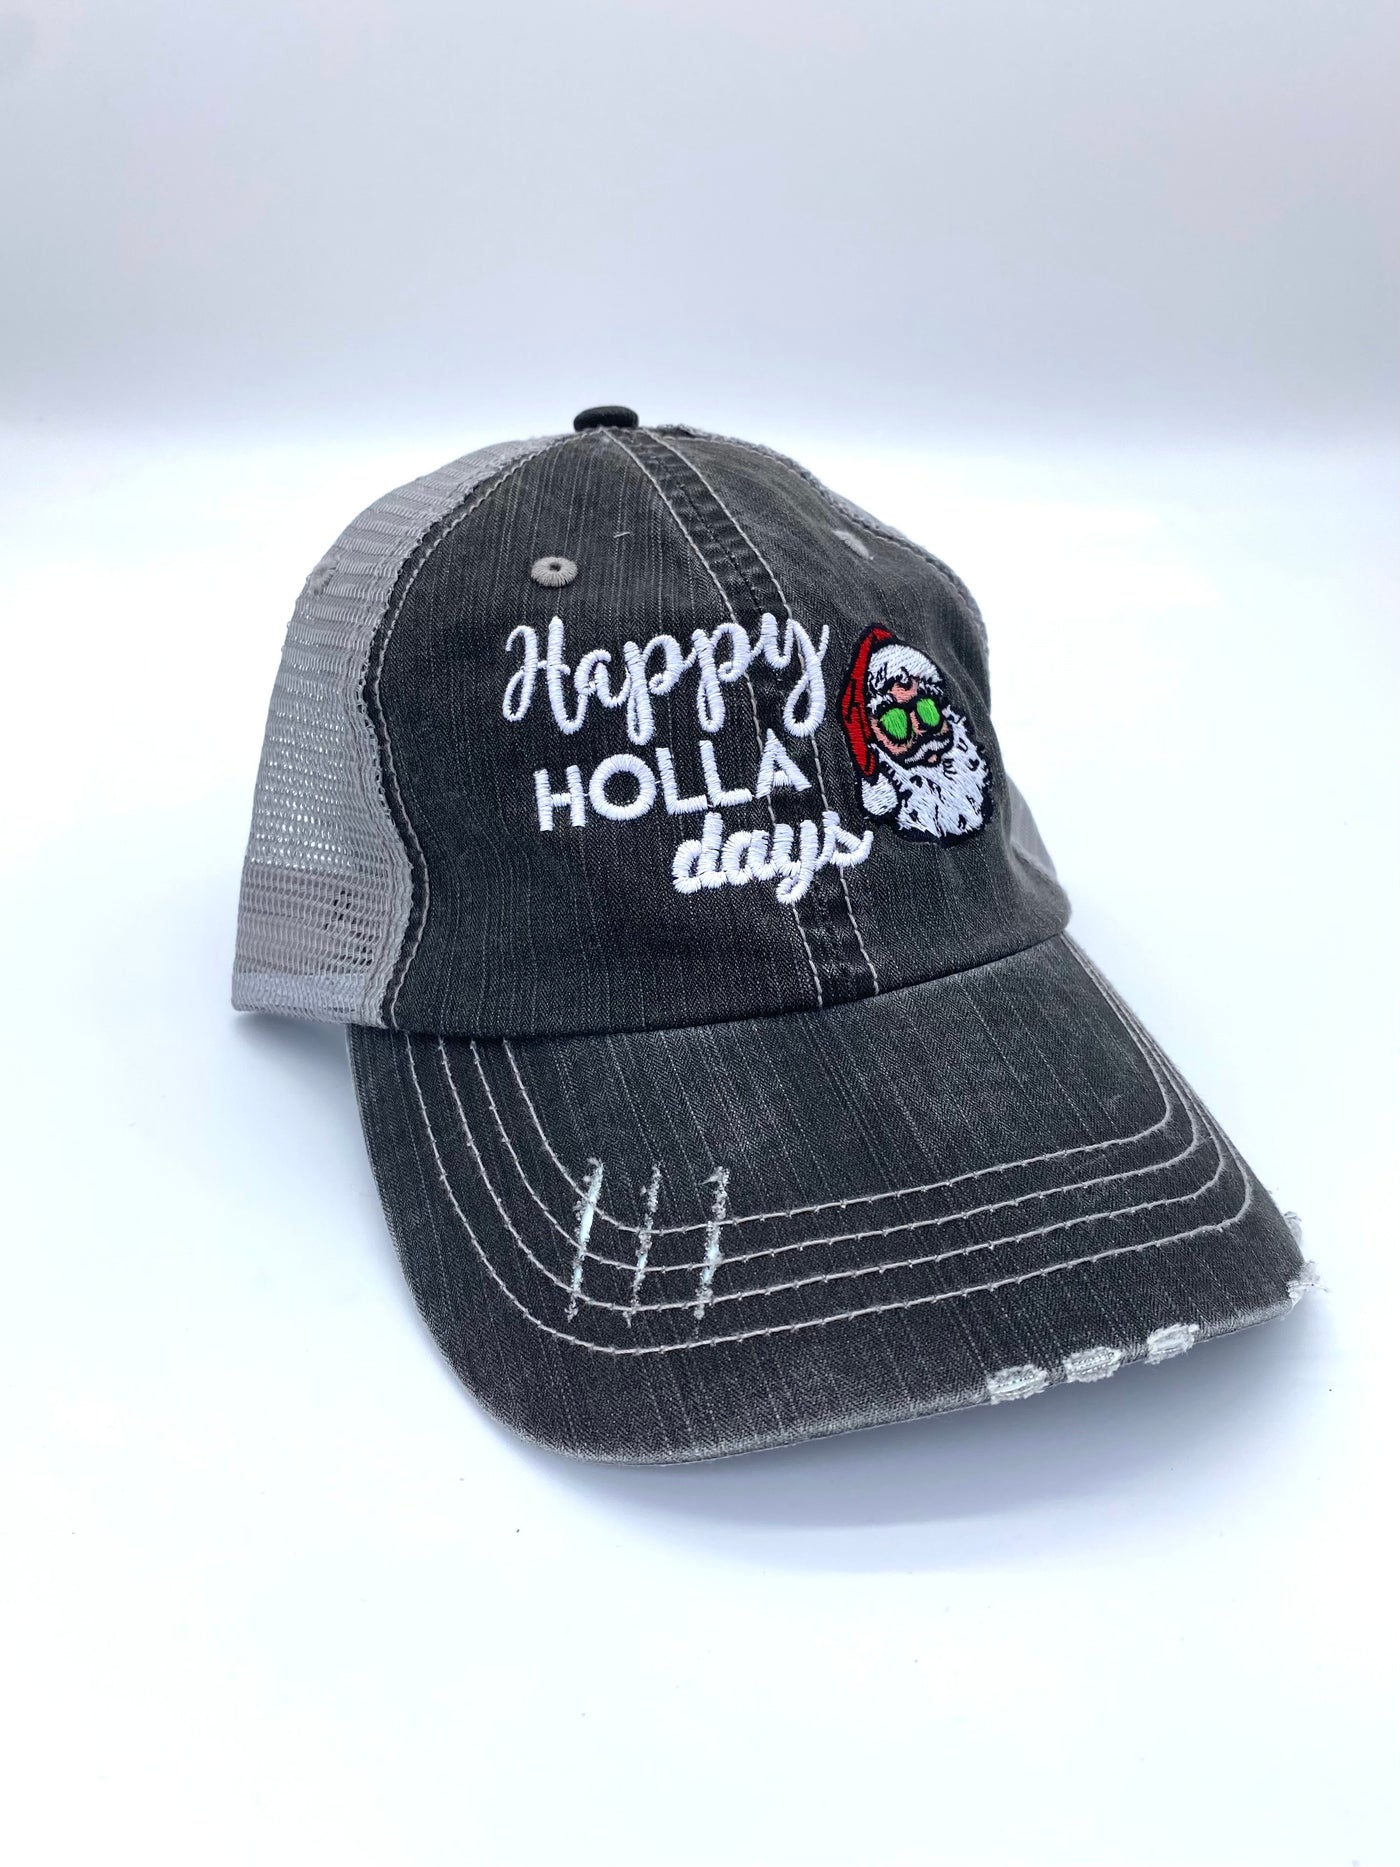 Keep On Truckin' Hats